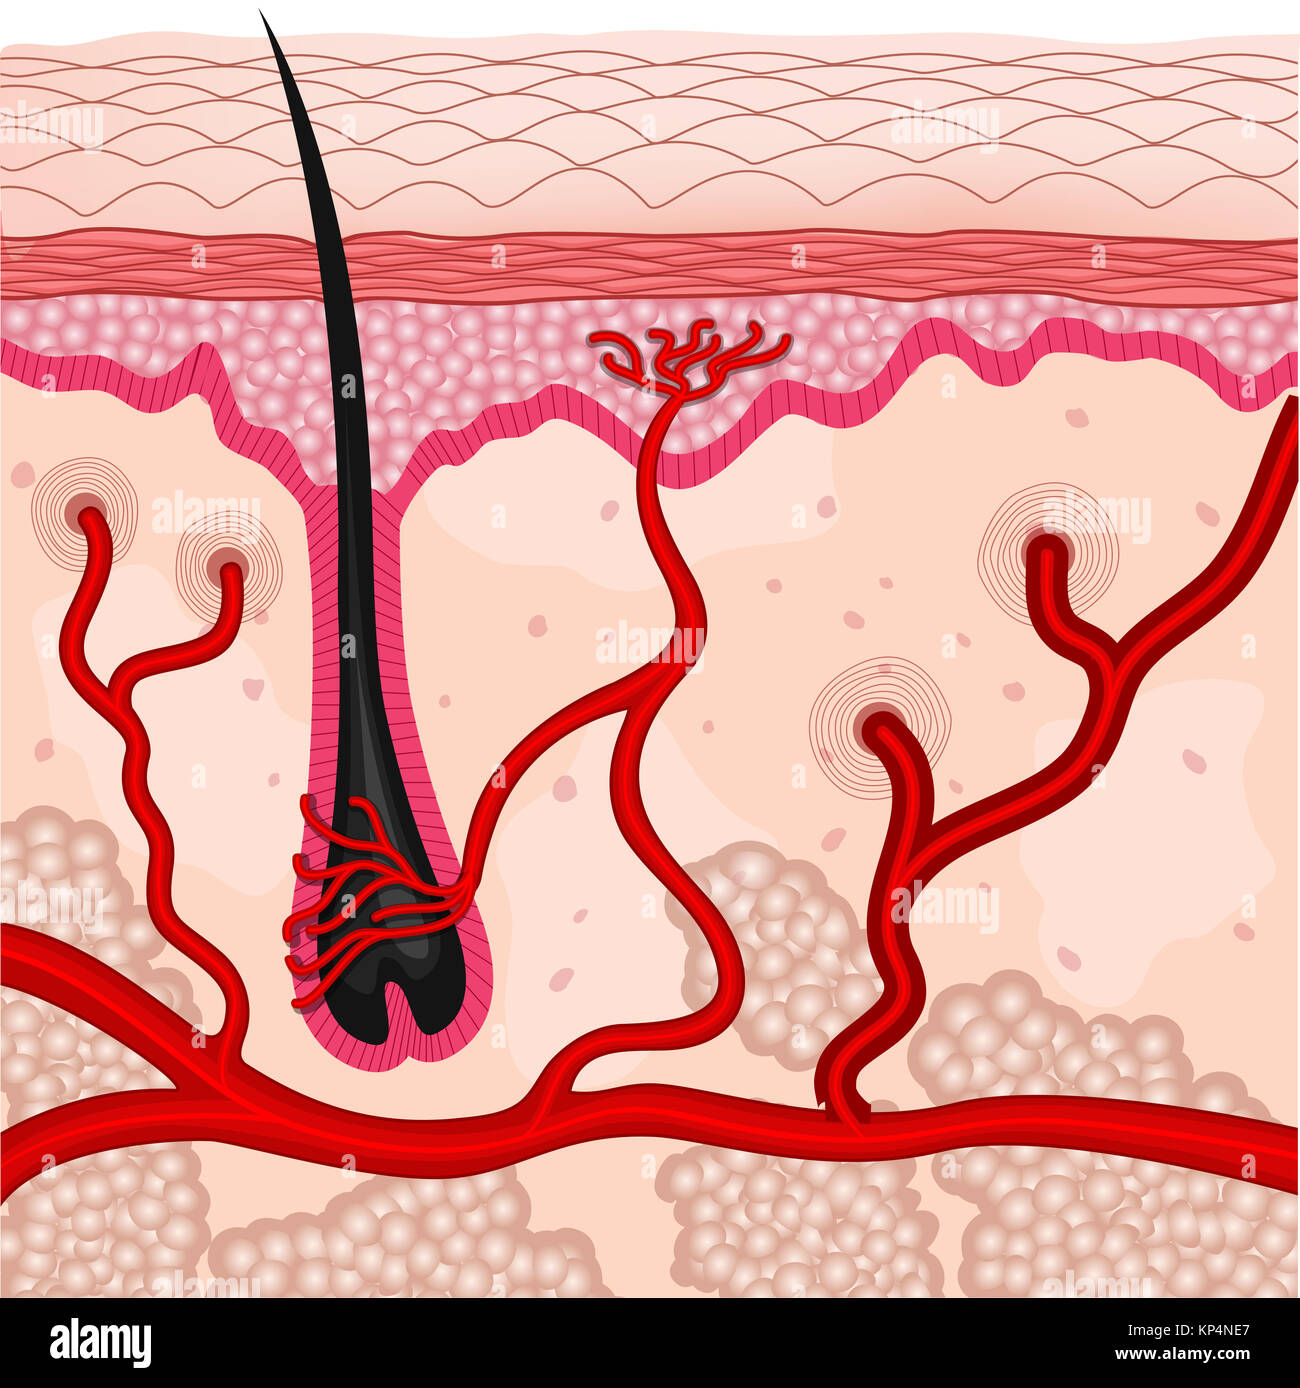 illustration of human skin cells Stock Photo